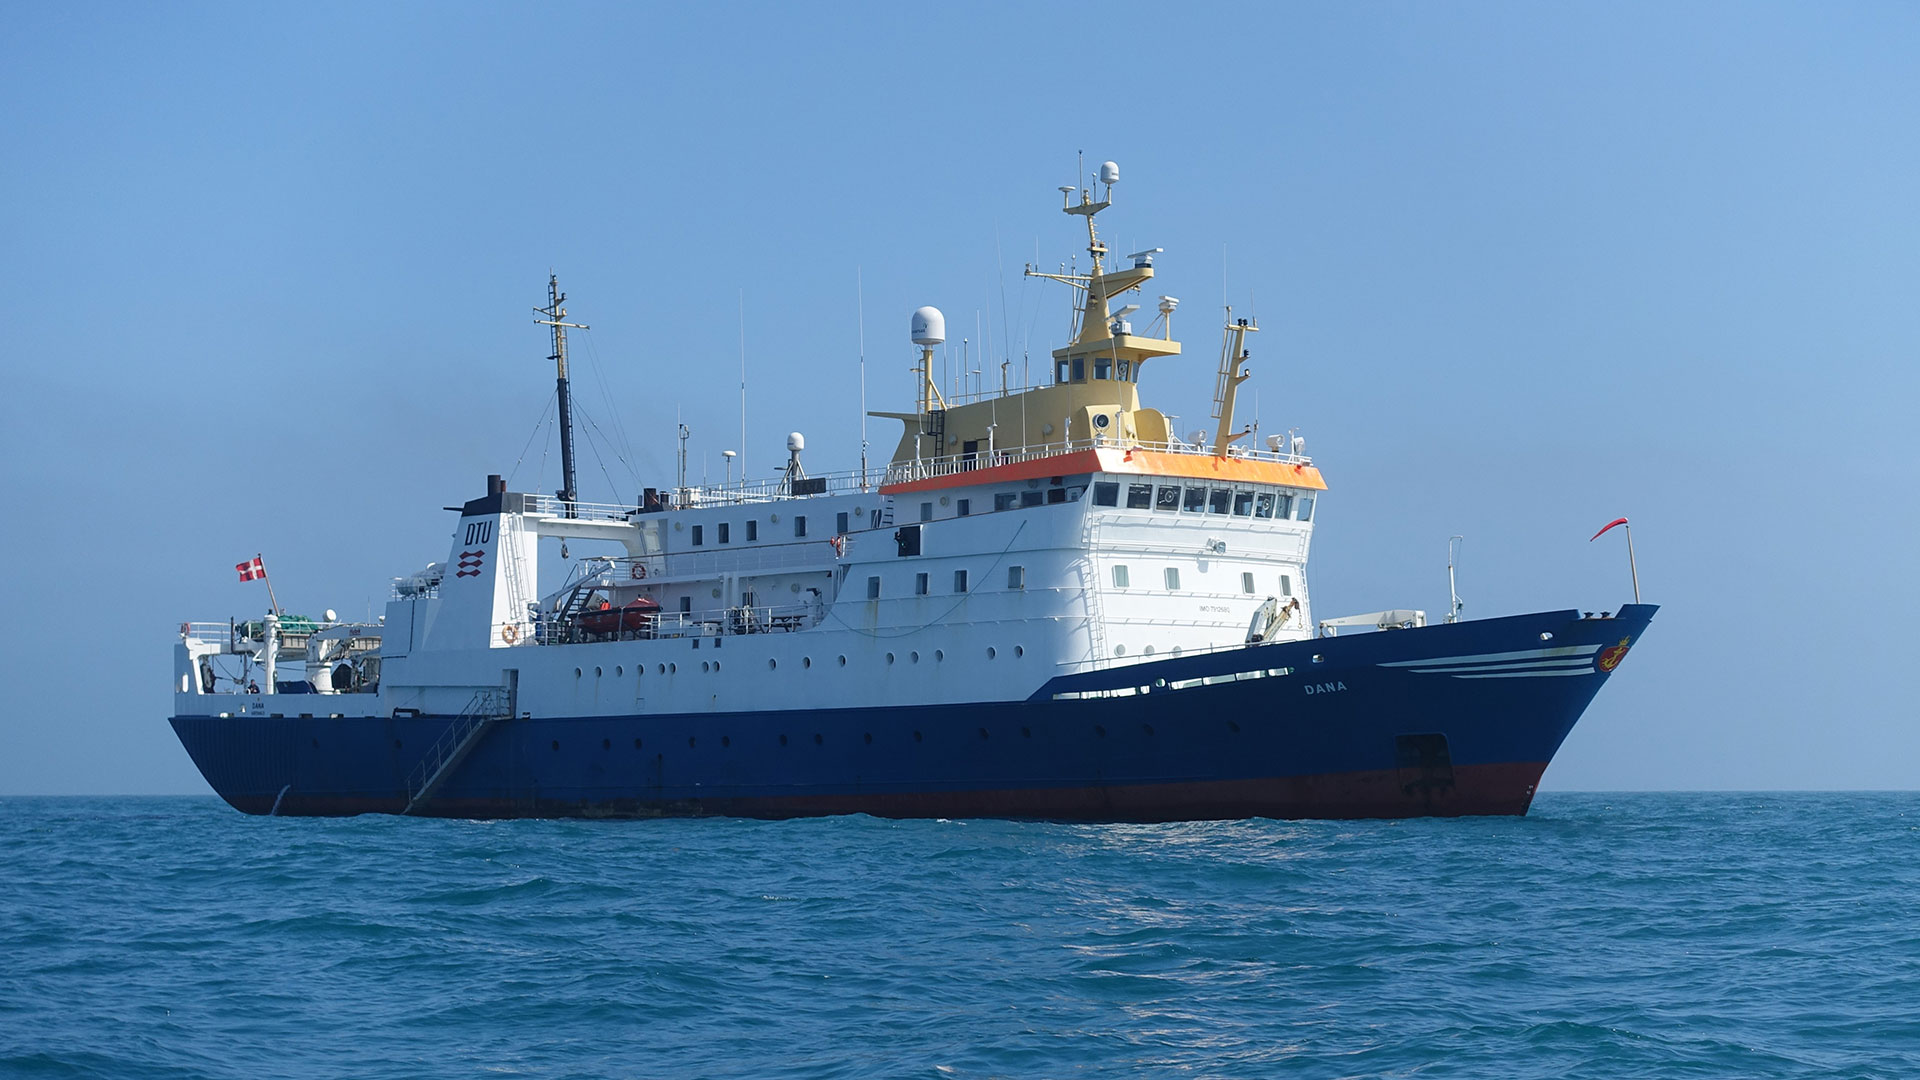 The research vessel Dana IV